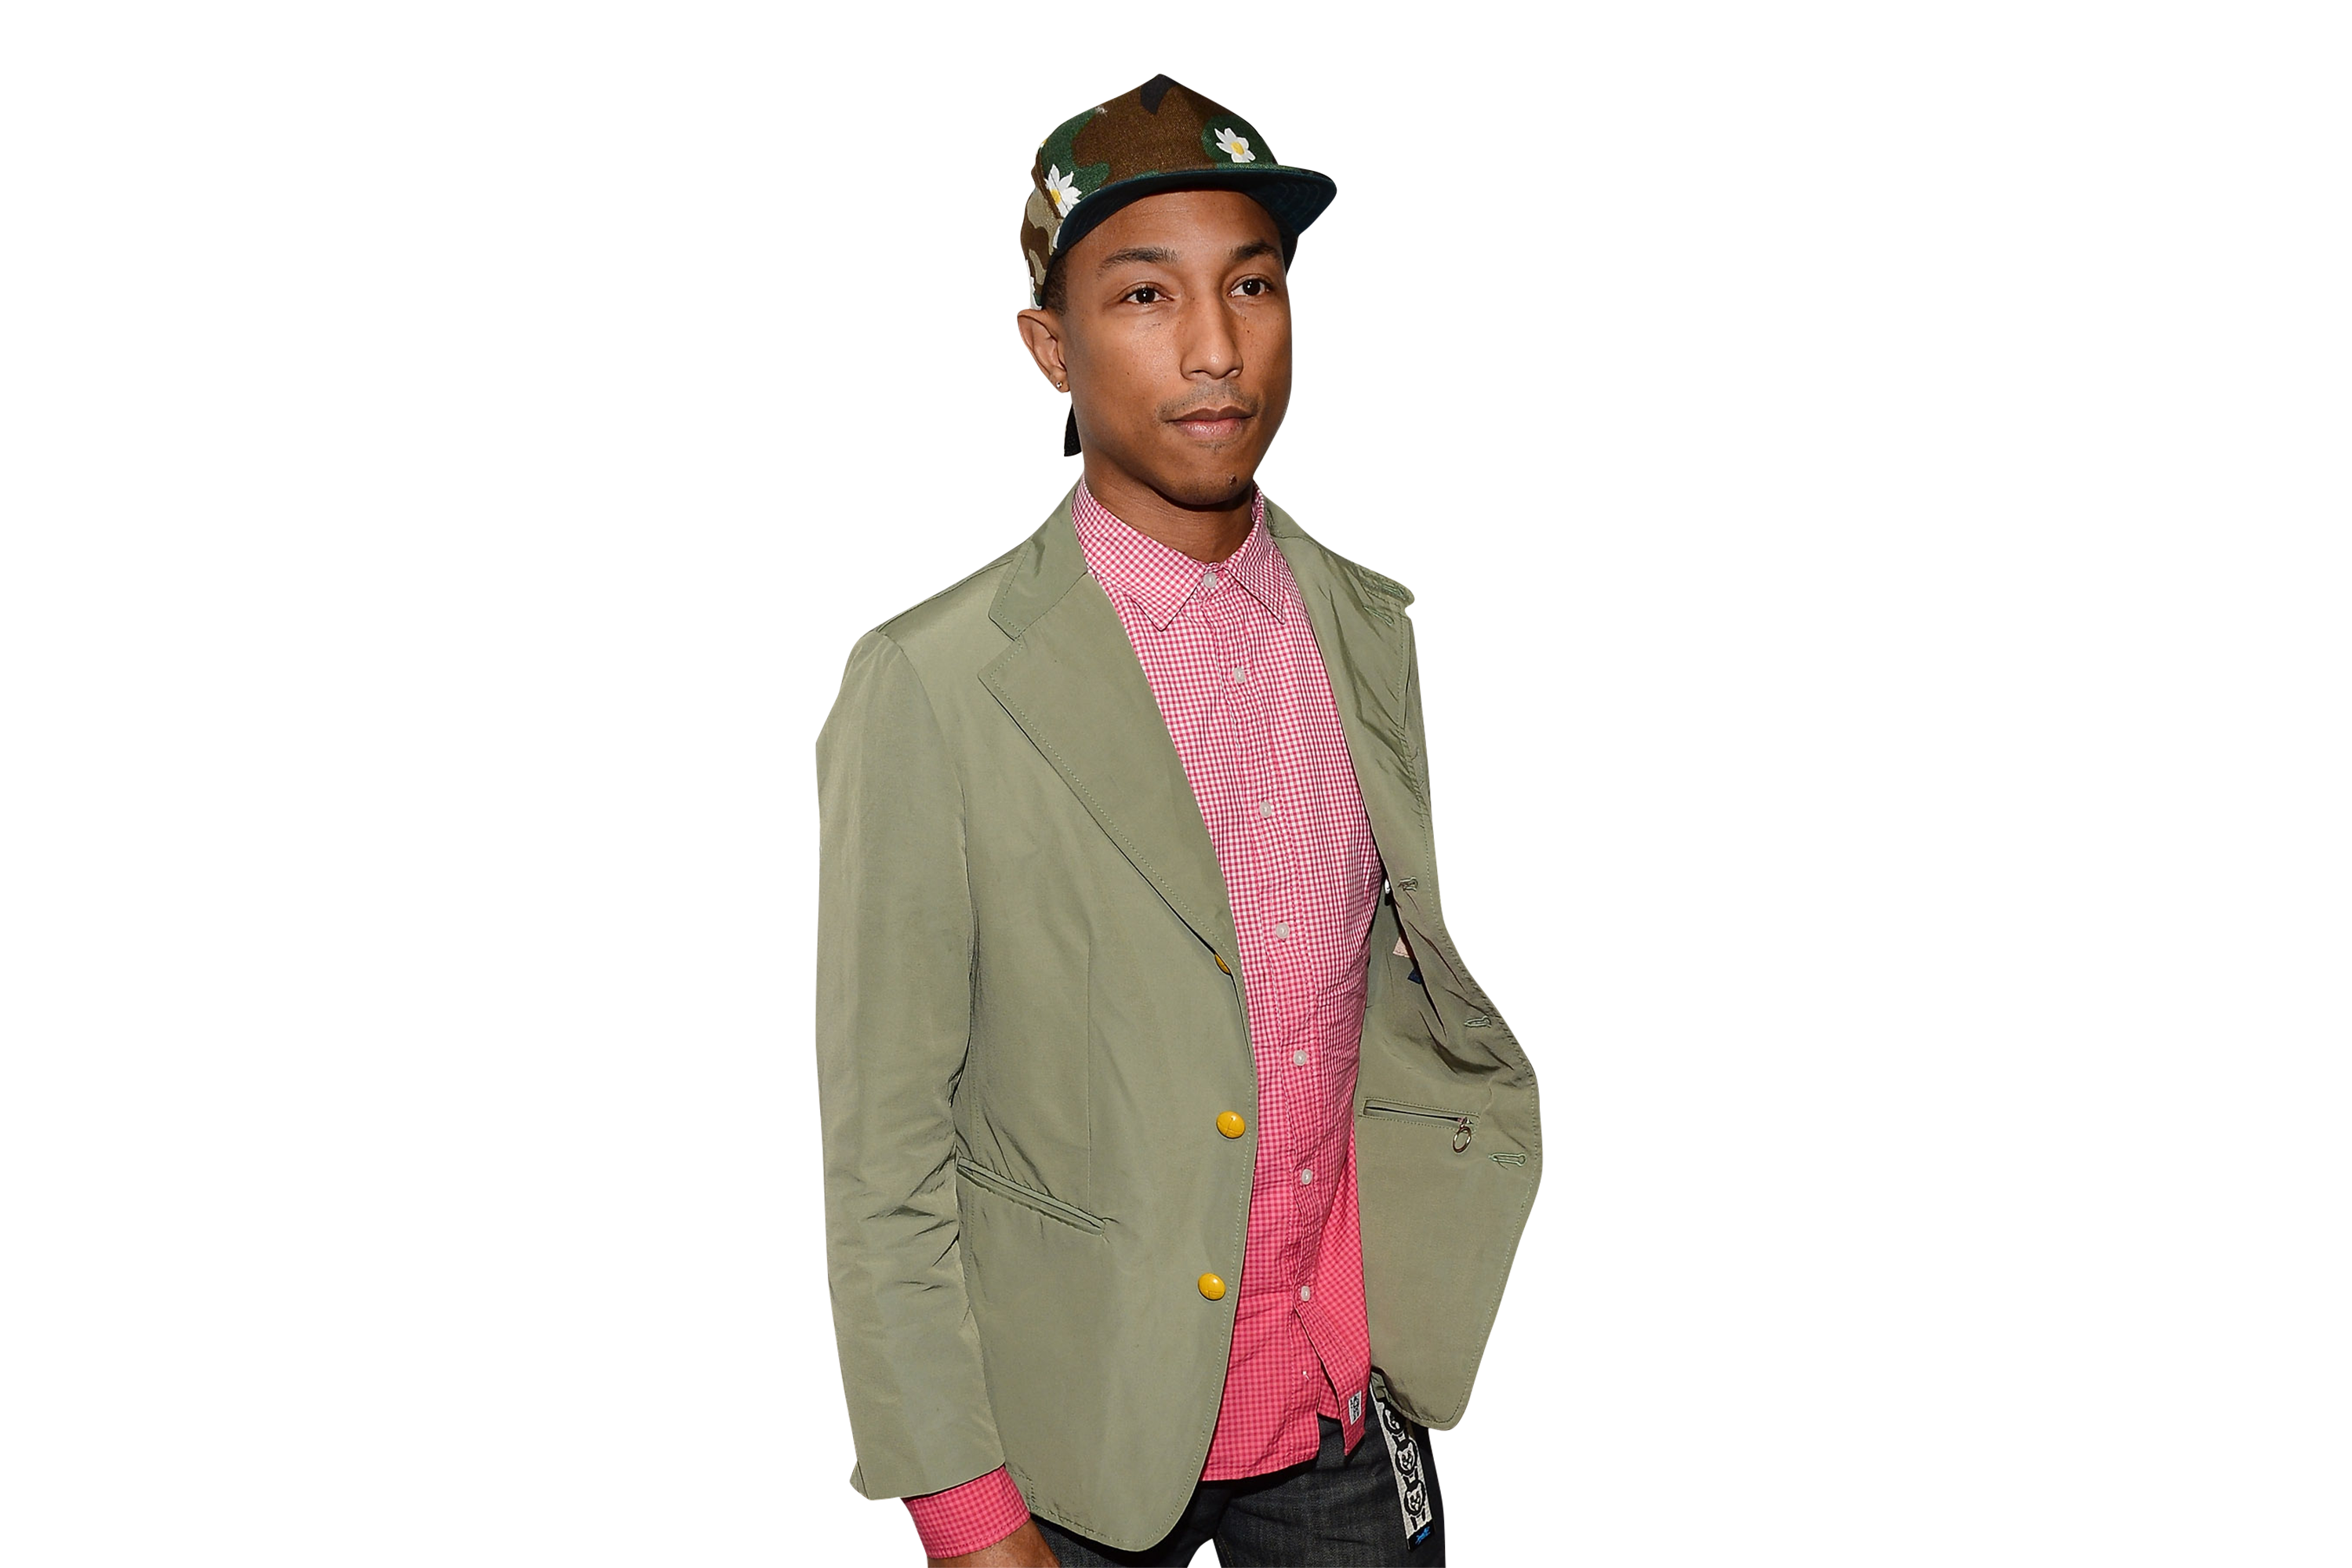 Is Pharrell Williams the ugli